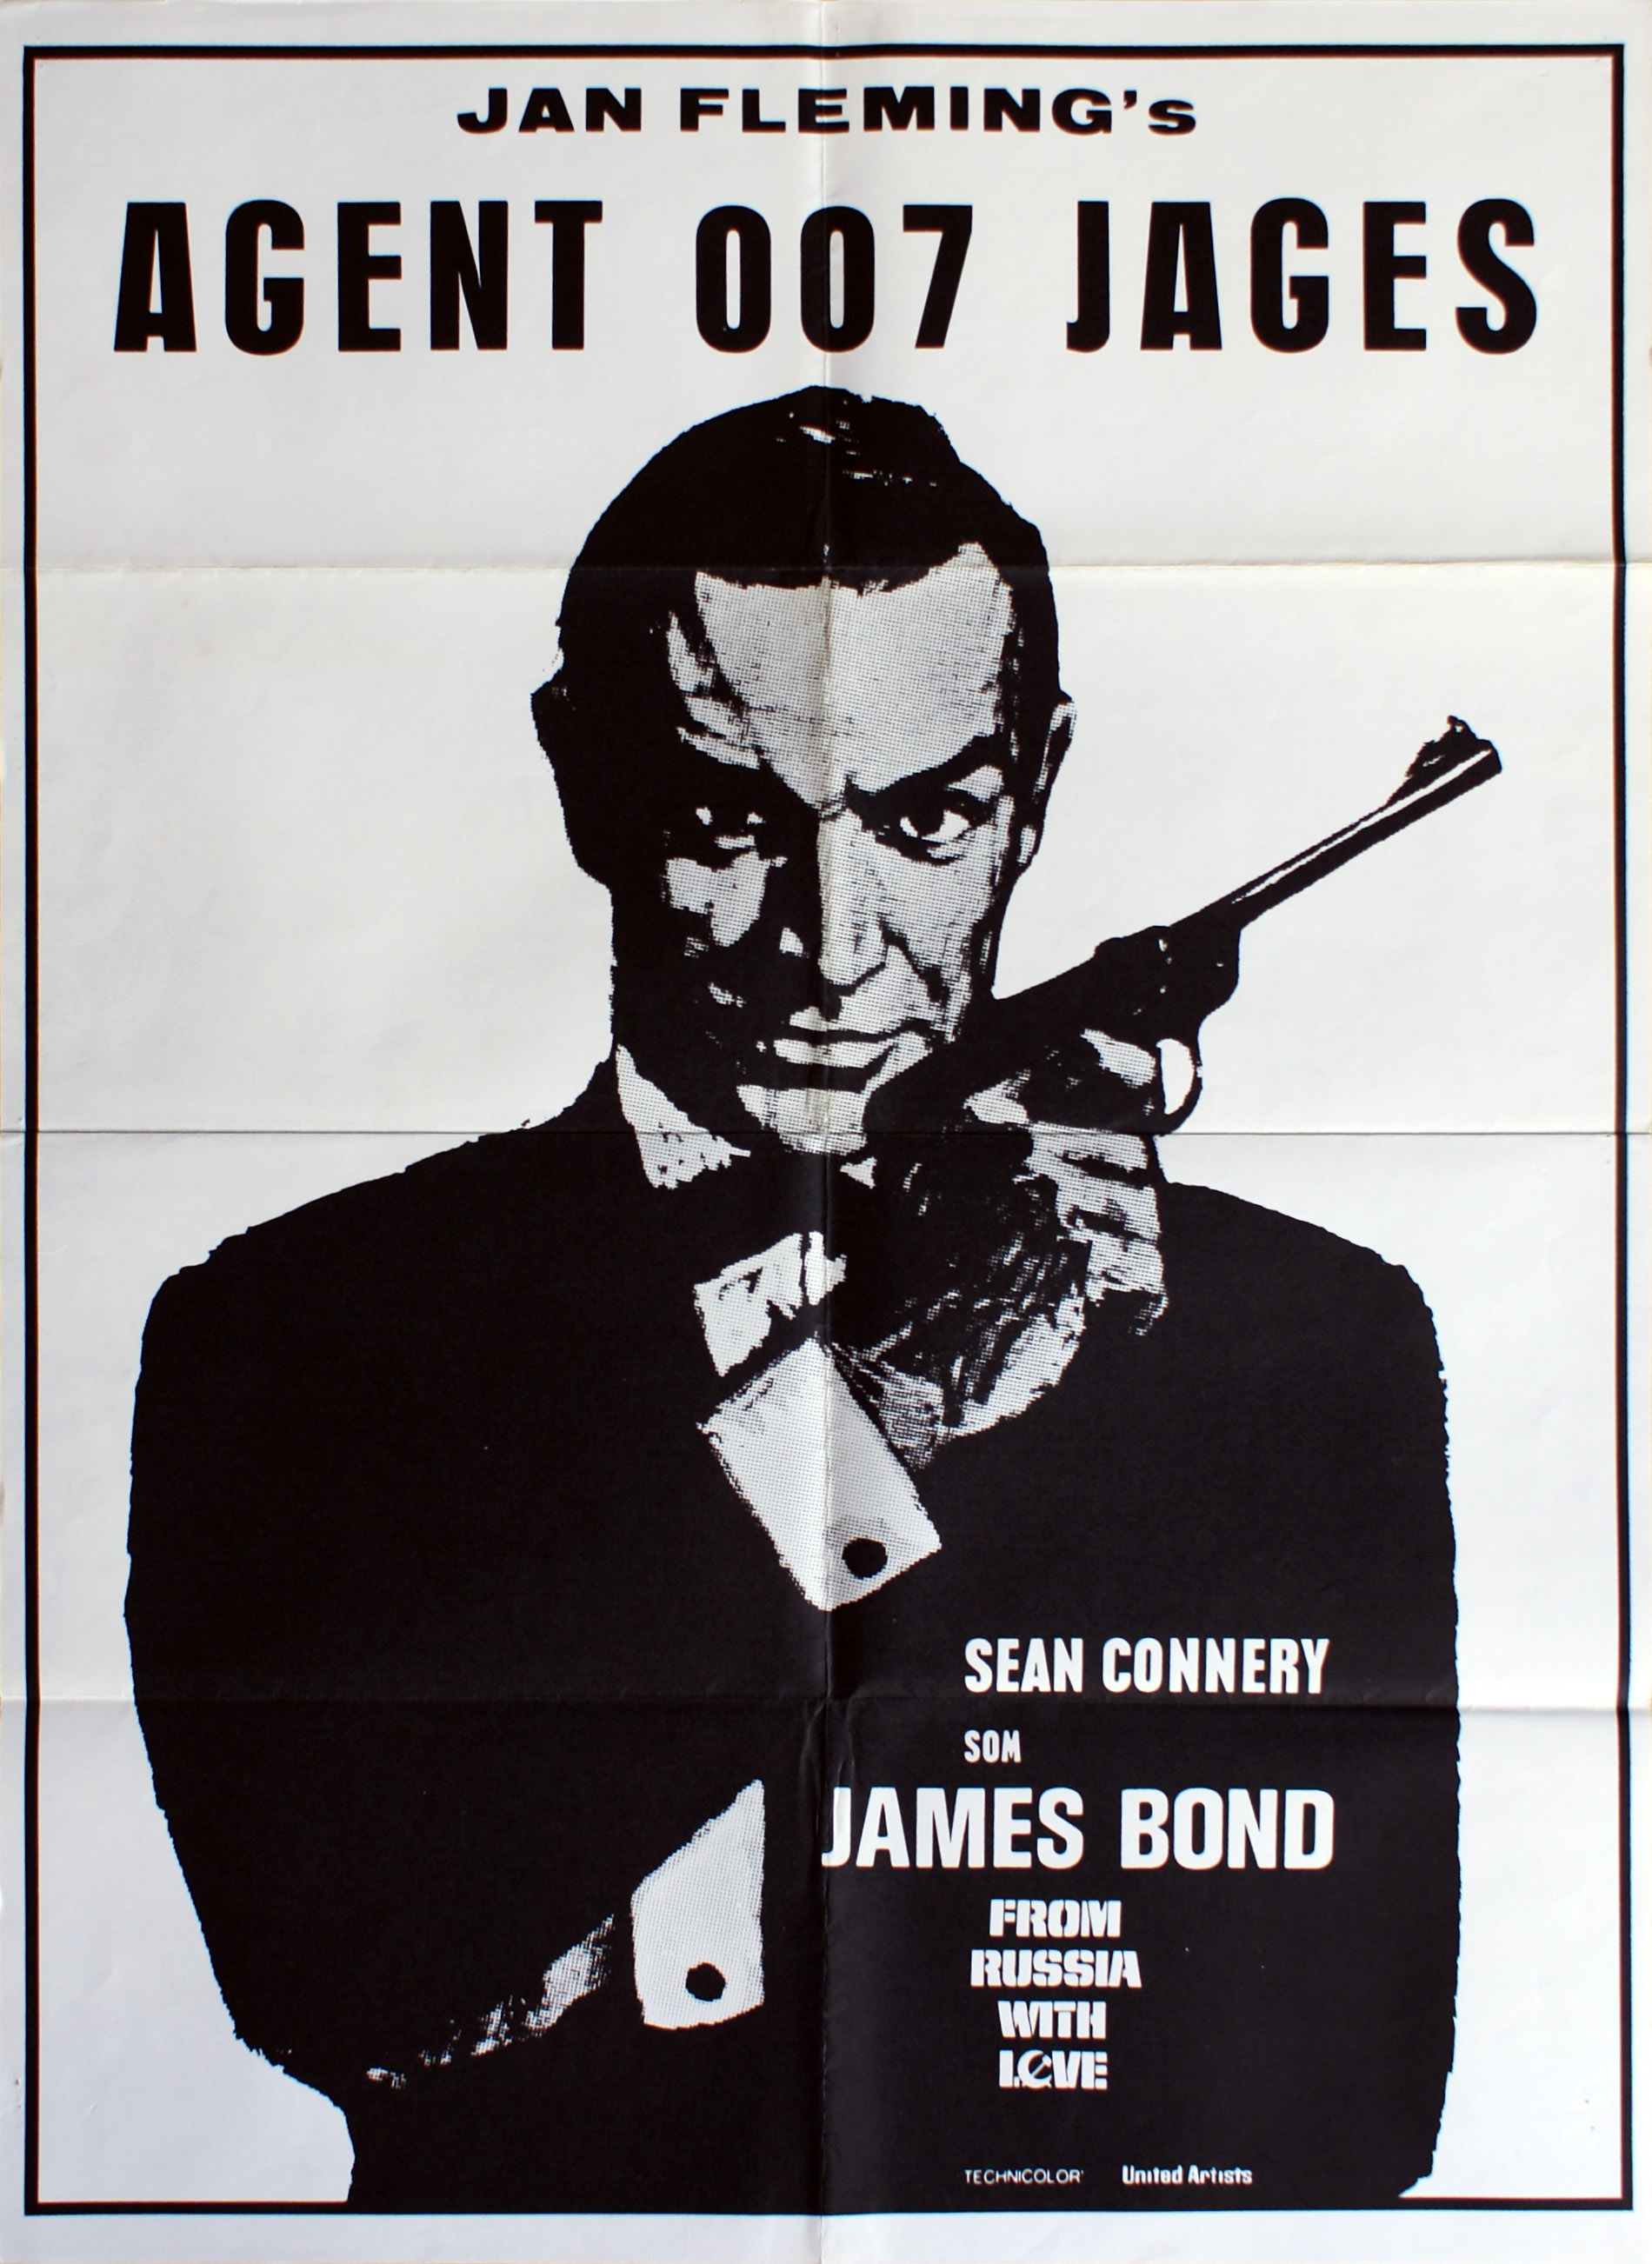 Agent-007-jages-DK-plakat-1.jpg